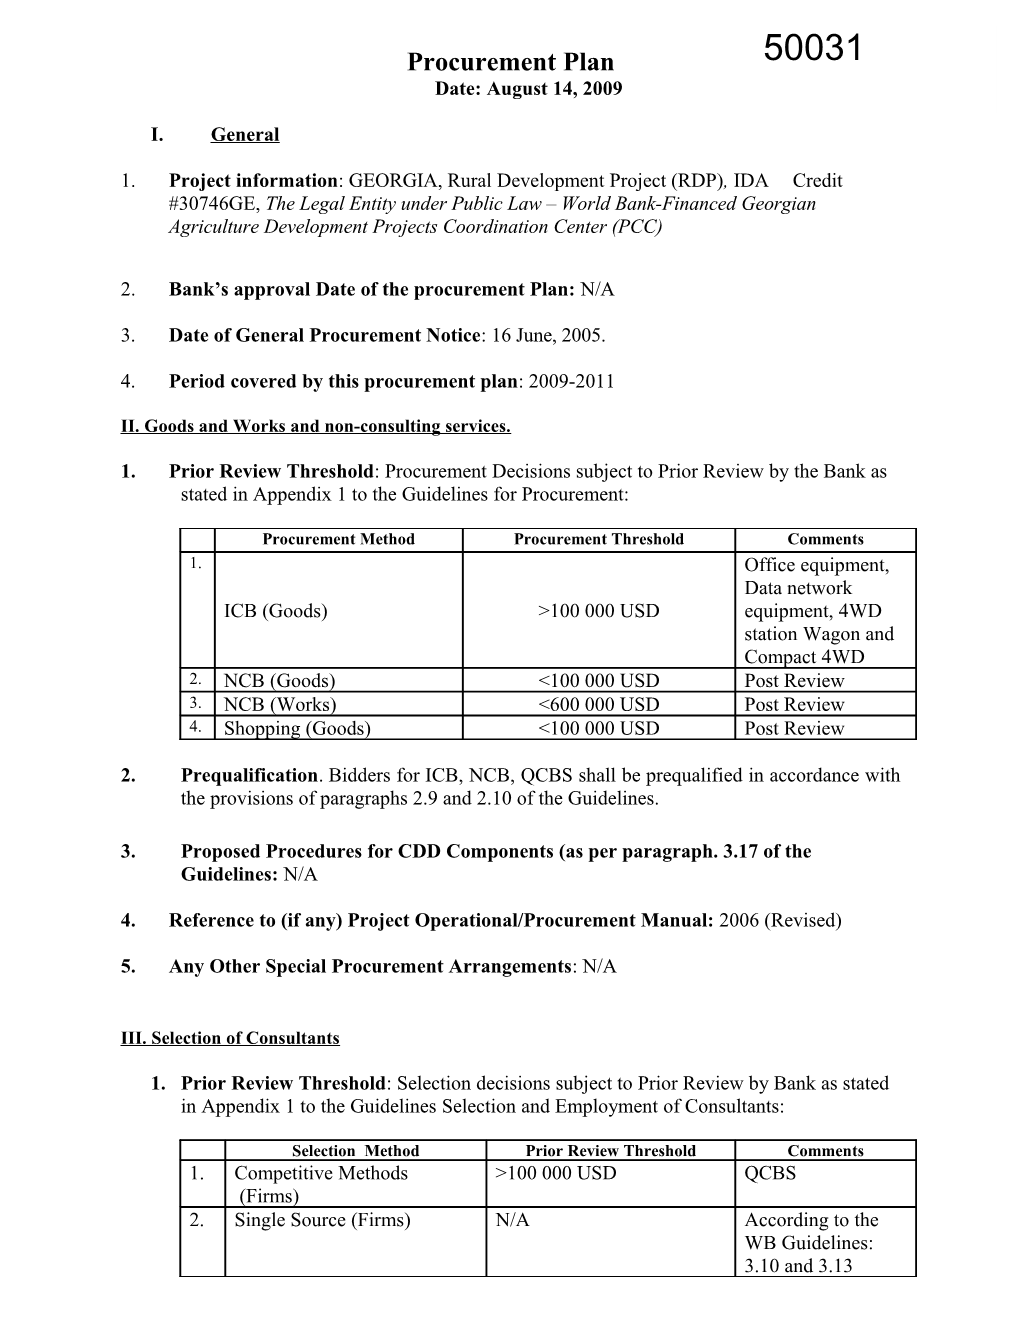 Annex 6: Procurement and Disbursement Arrangements